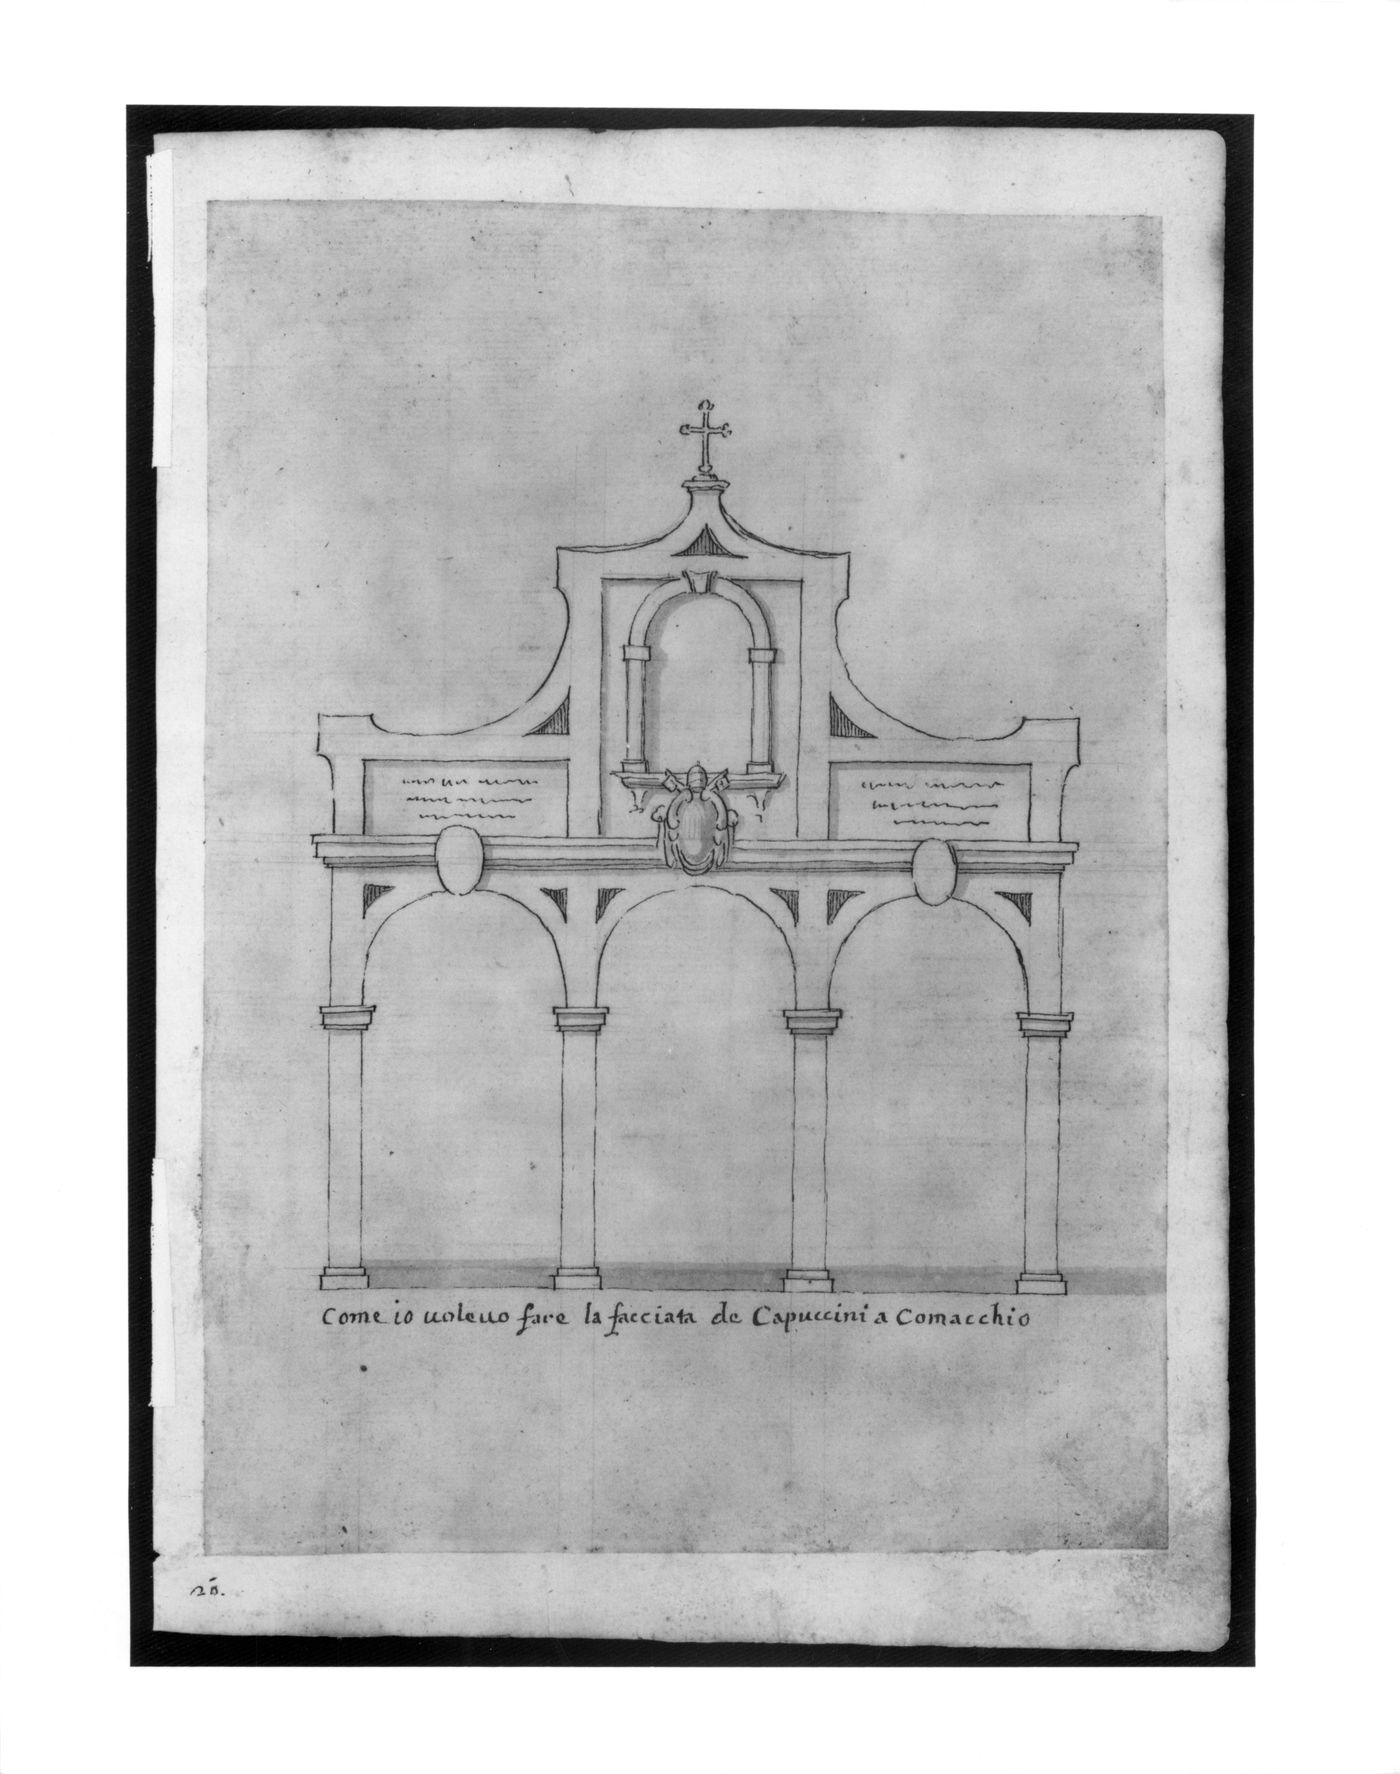 Proposed elevation for the facade of Santa Maria in Aula Regia, Comacchio